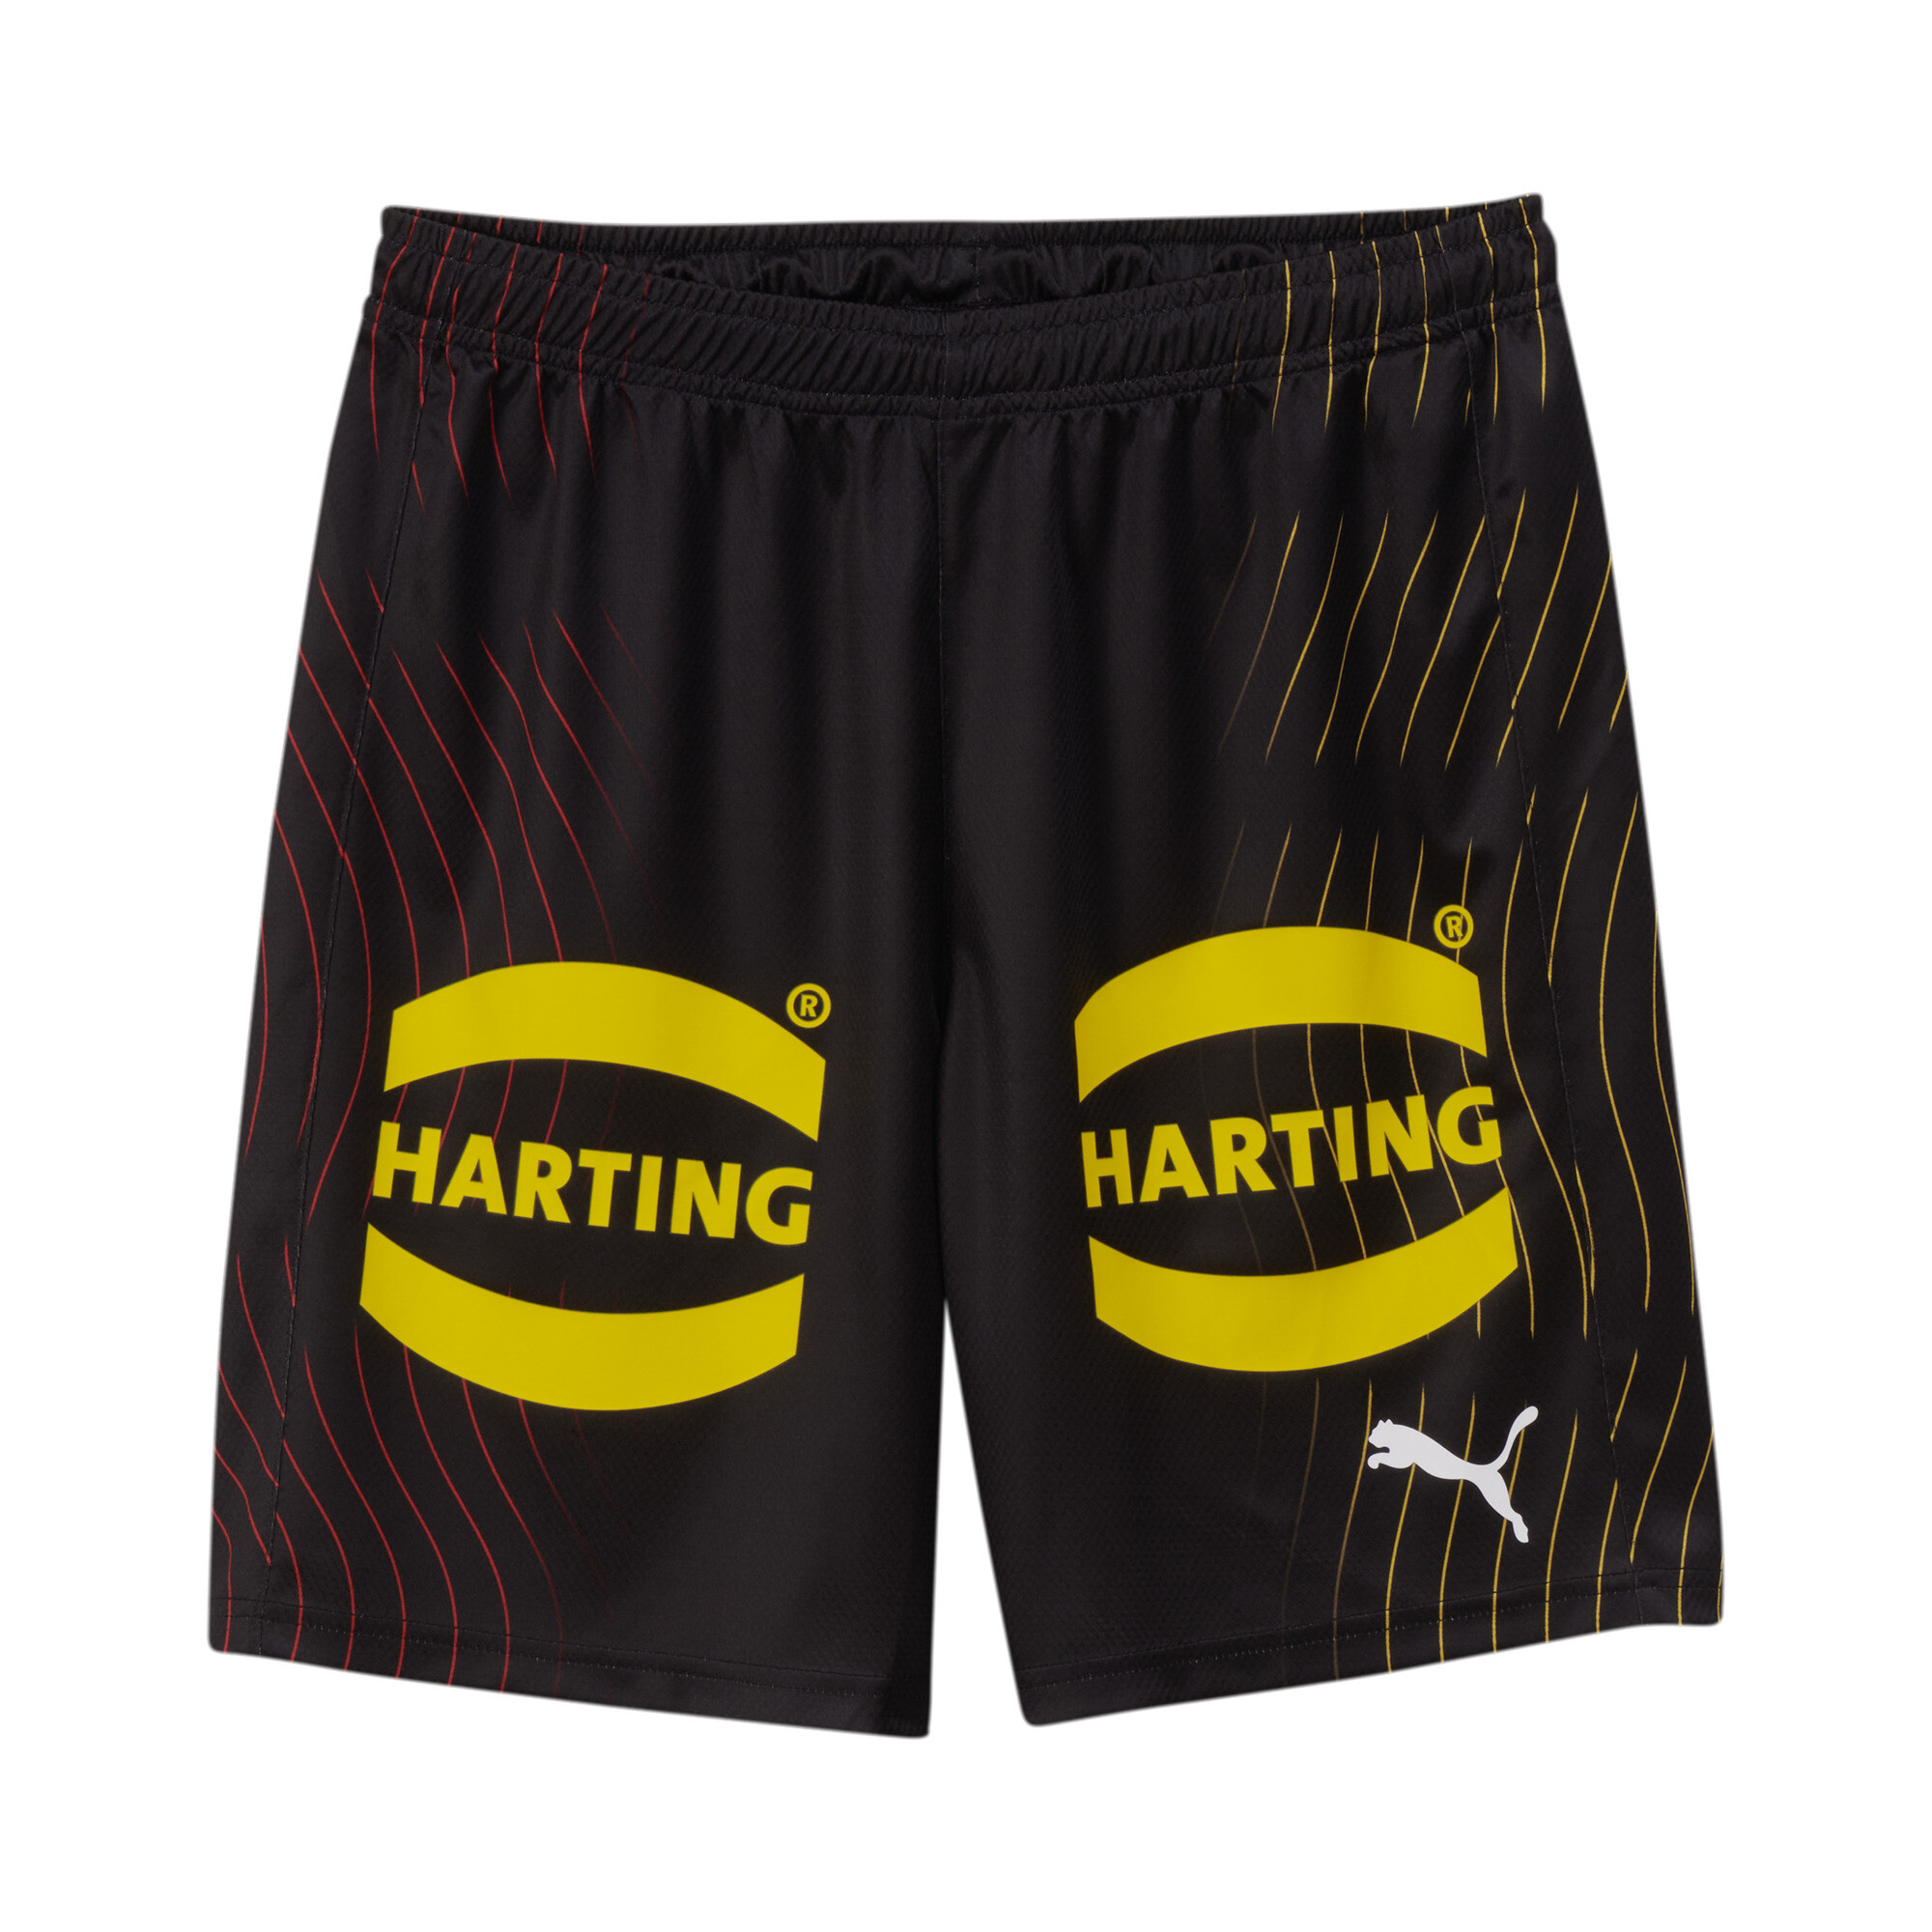 Men's Puma DHB's Handball Shorts, Black, Size 3XL, Clothing